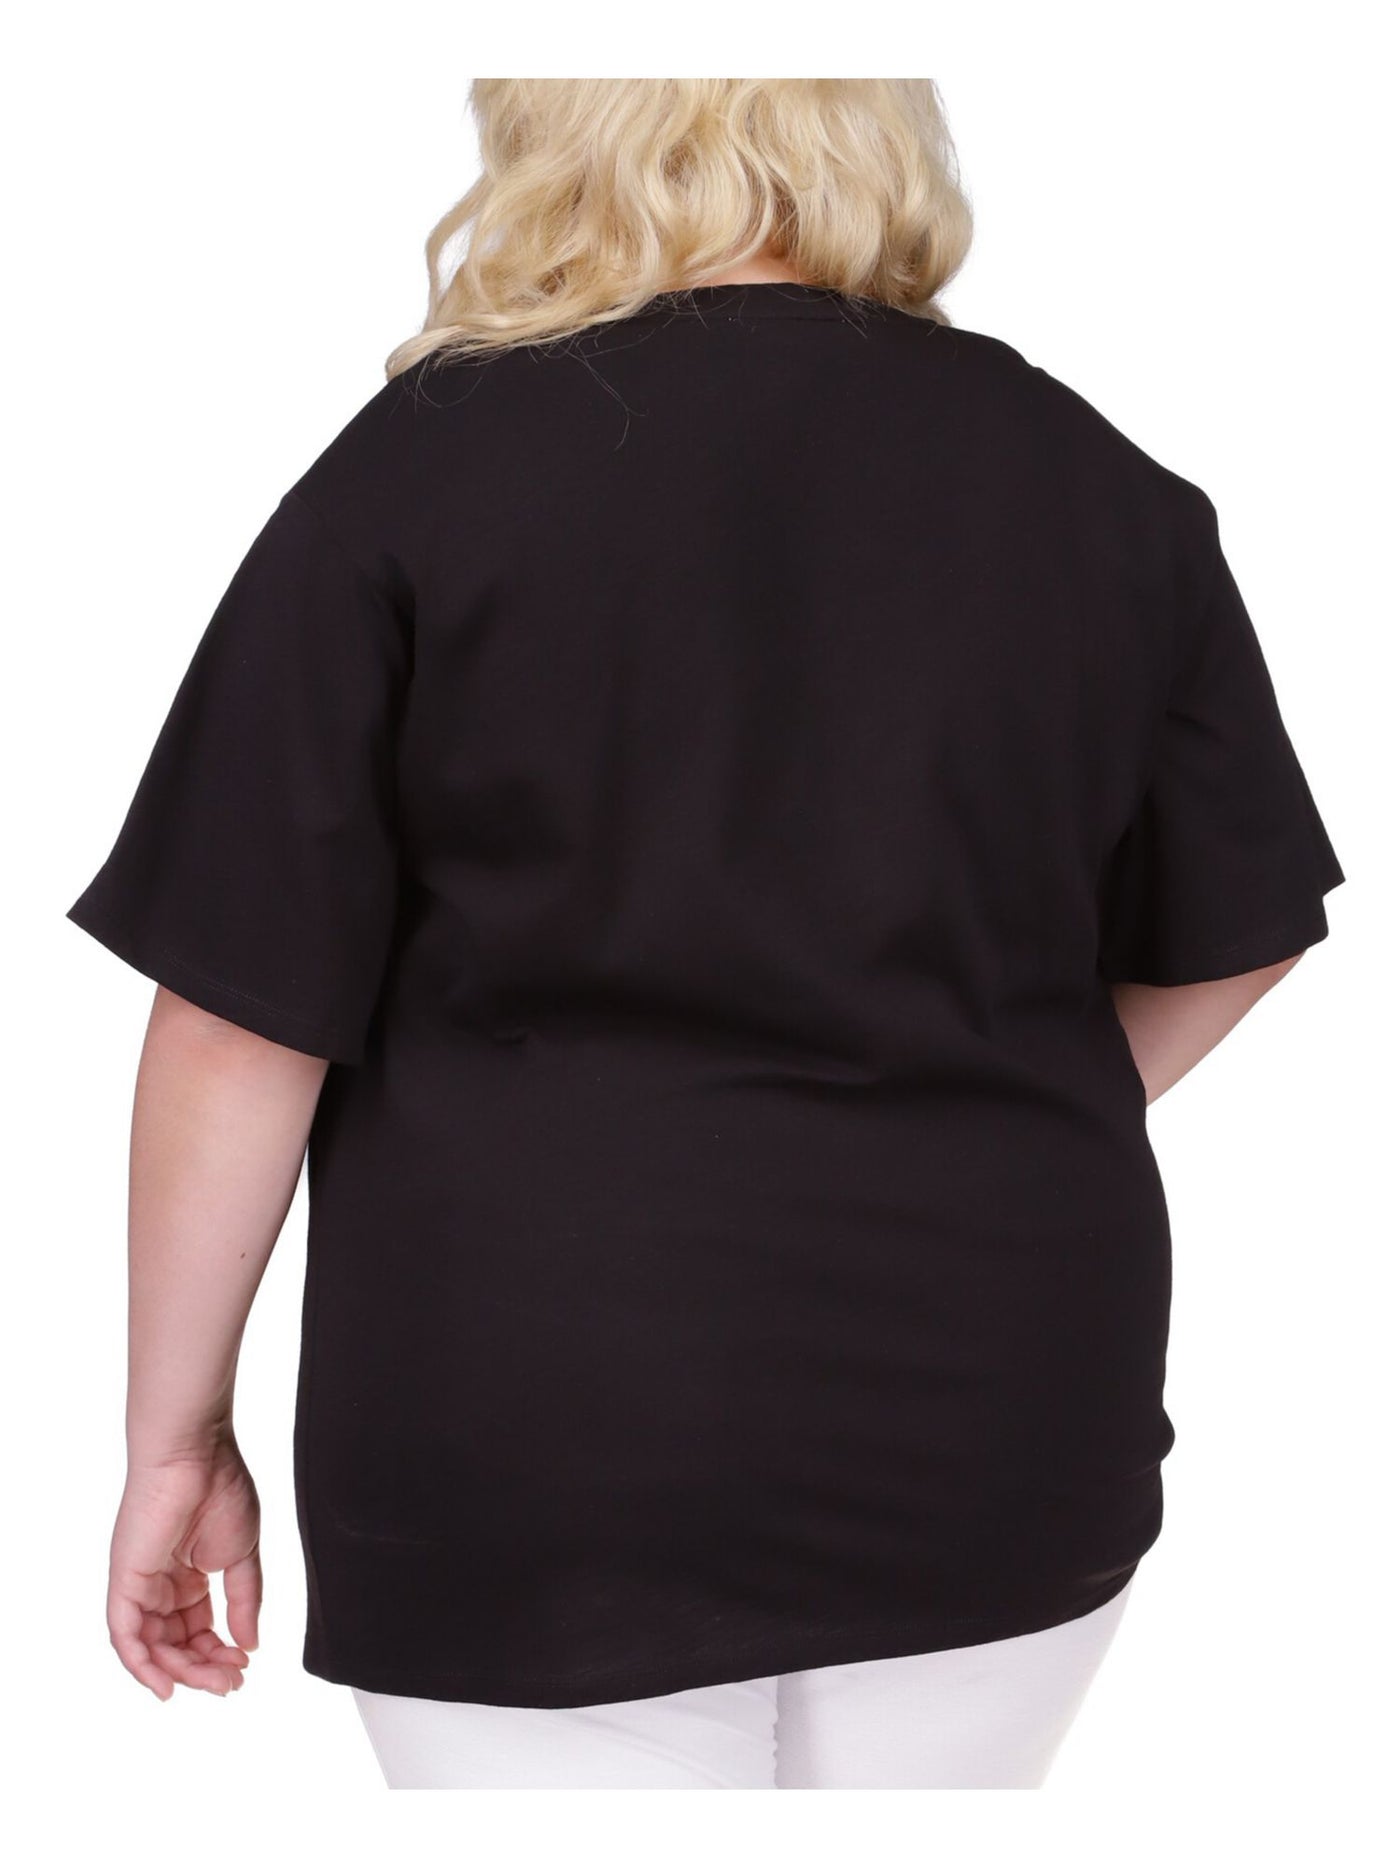 MICHAEL KORS Womens Black Elbow Sleeve Crew Neck T-Shirt Plus 2X